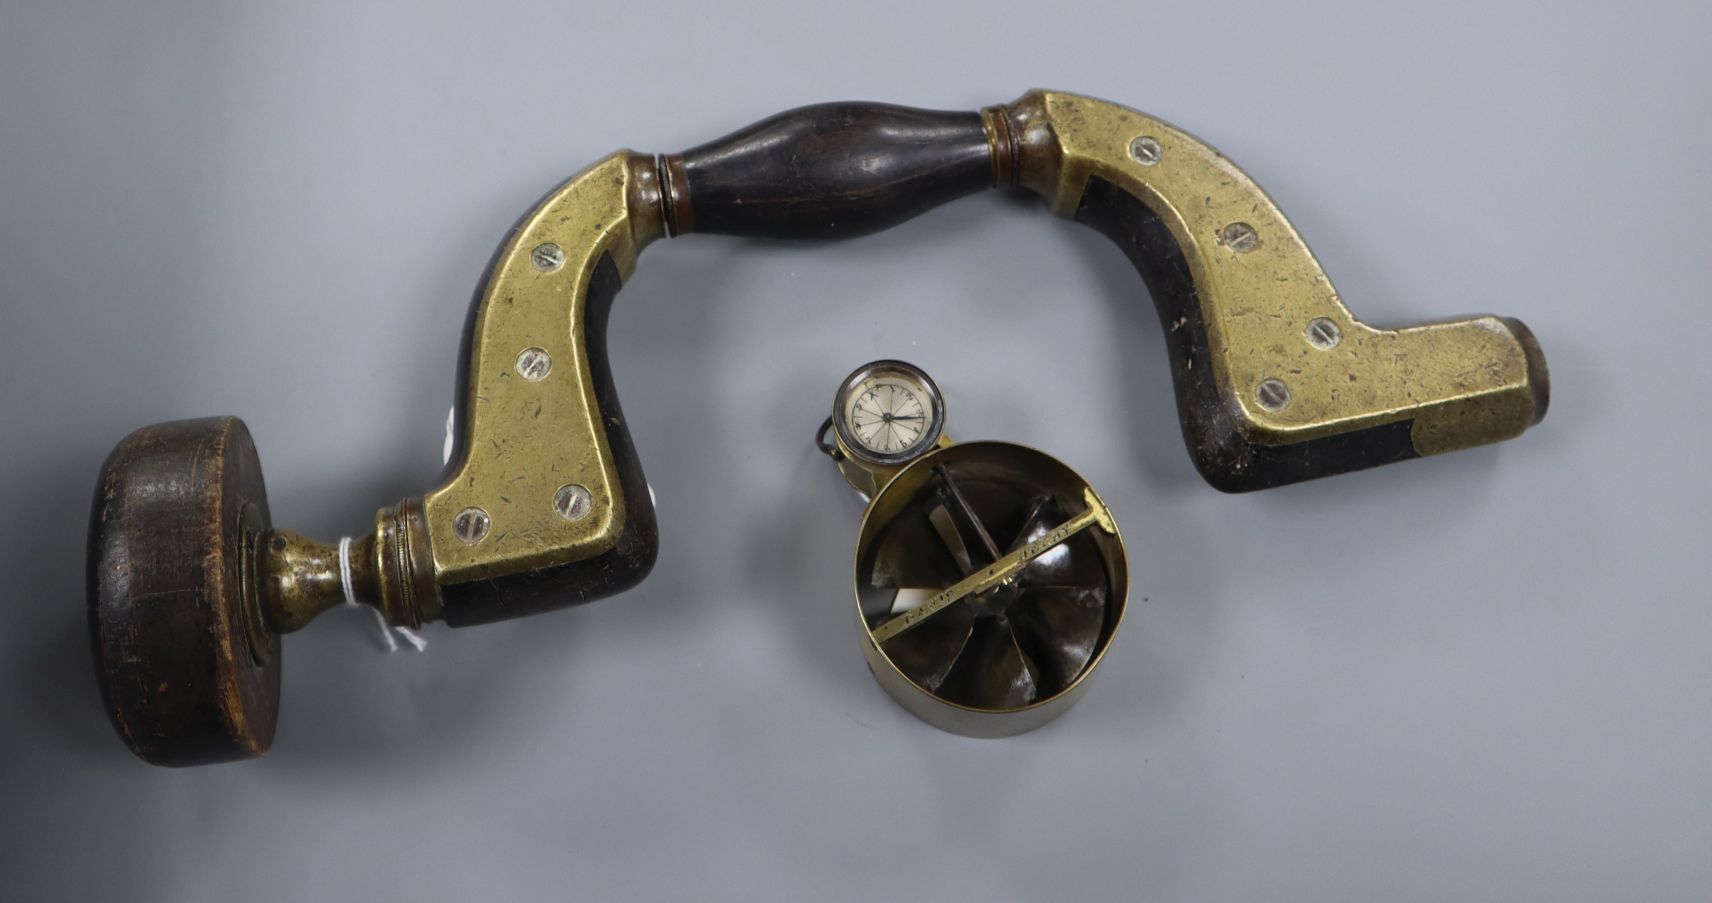 A brass anemometer by Davis Derby and a William Harples brace